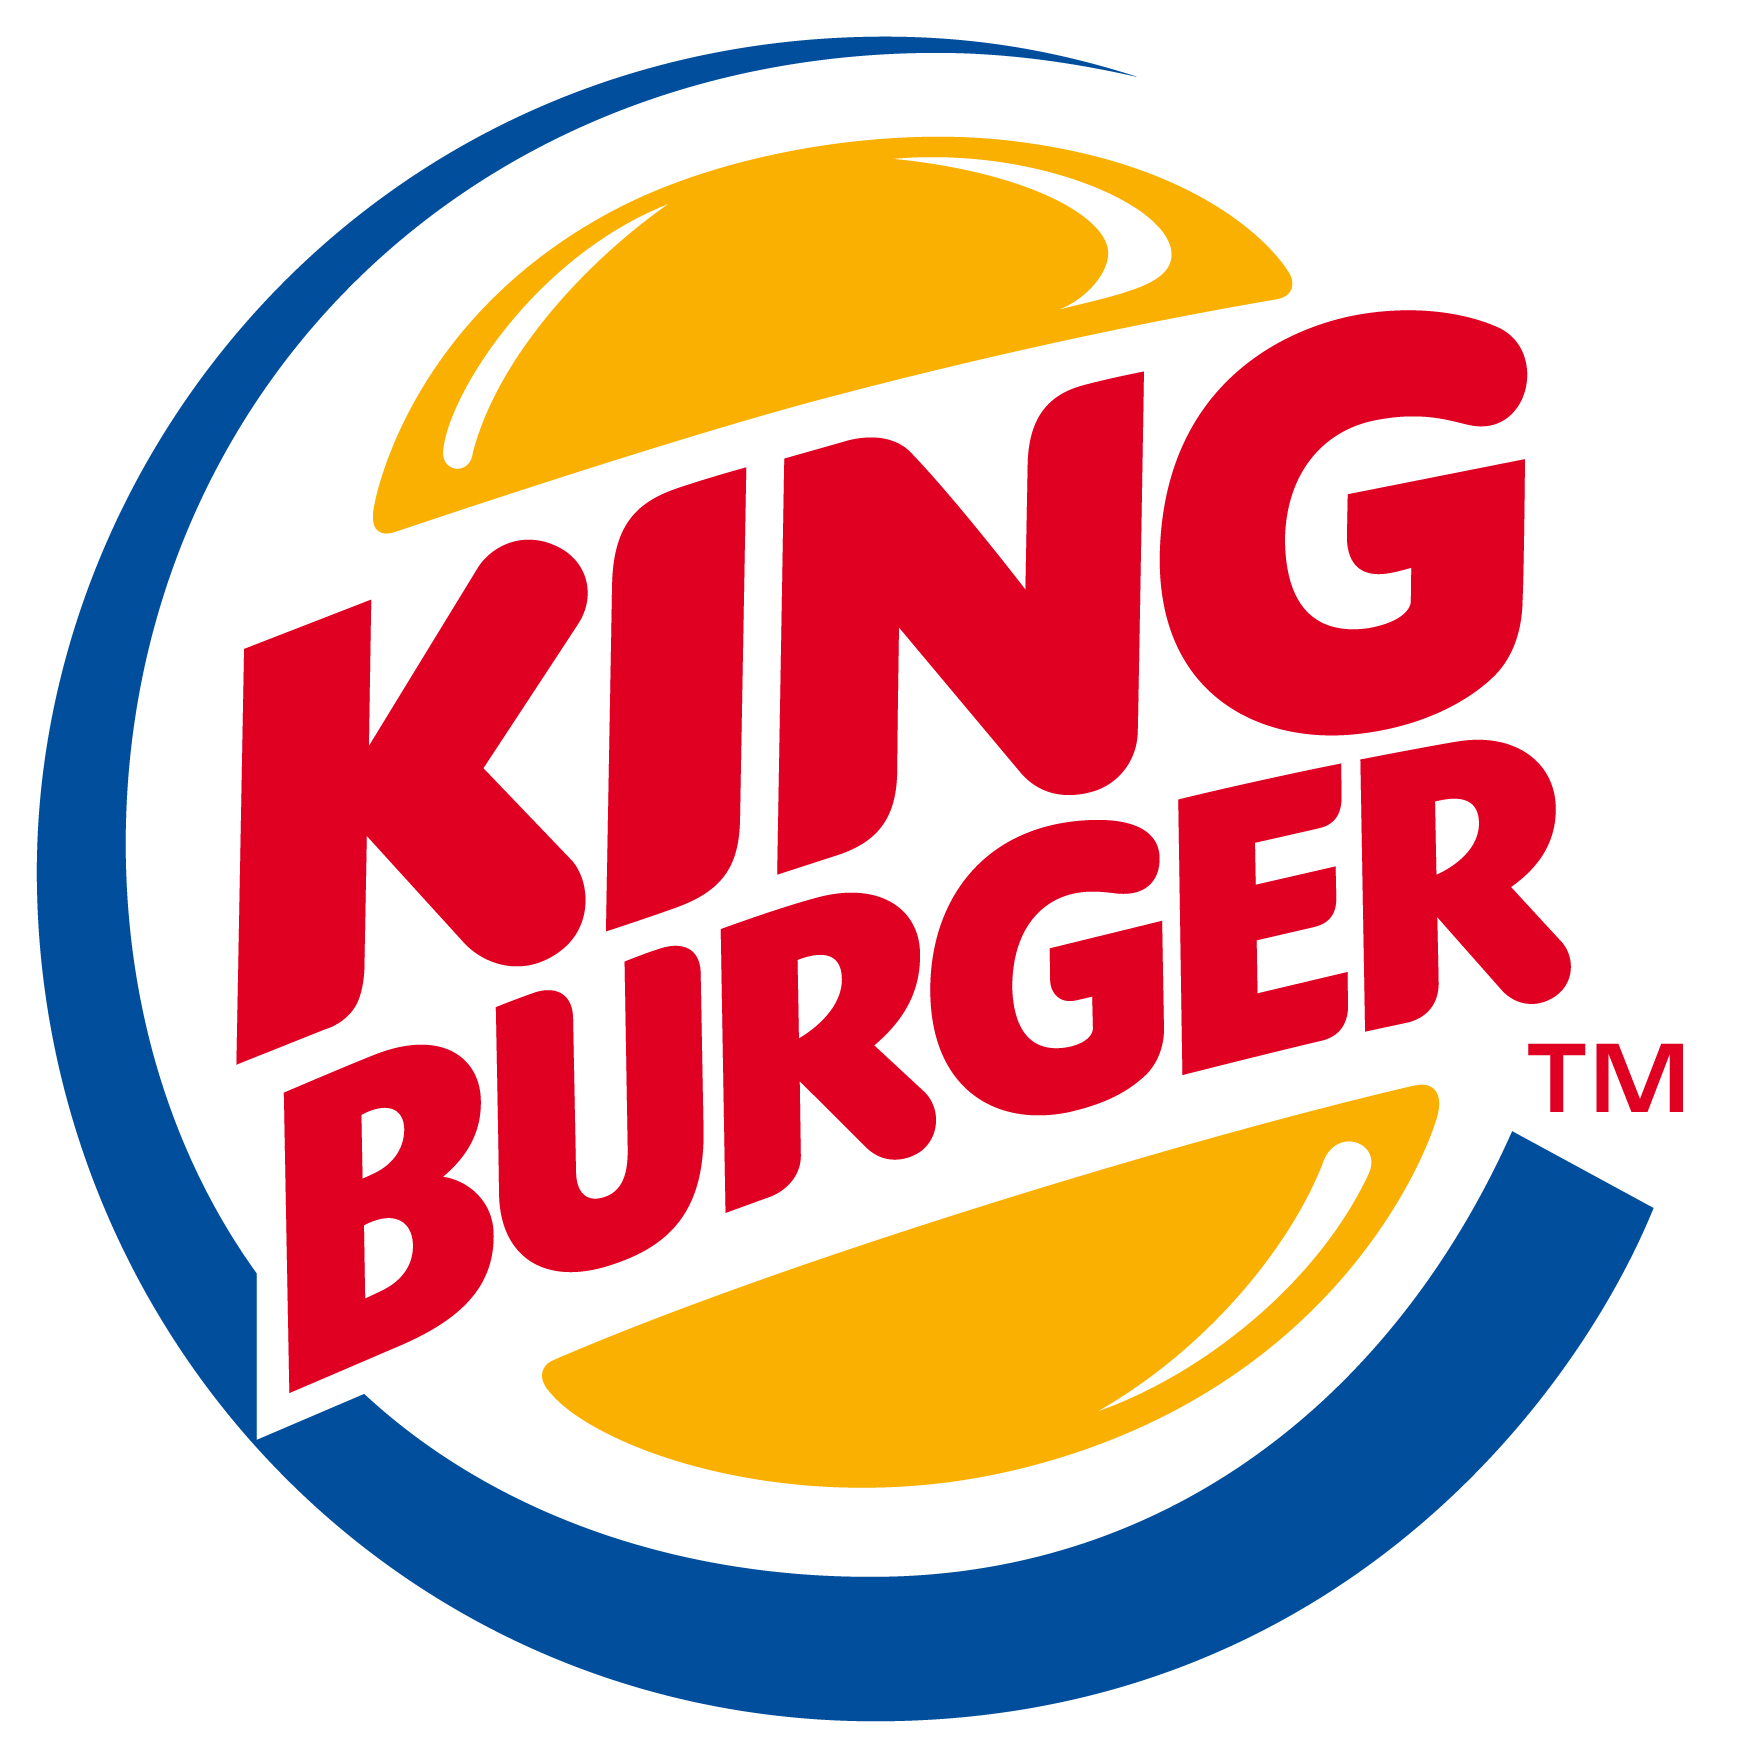 King Burger (logo) | Flickr - Photo Sharing!